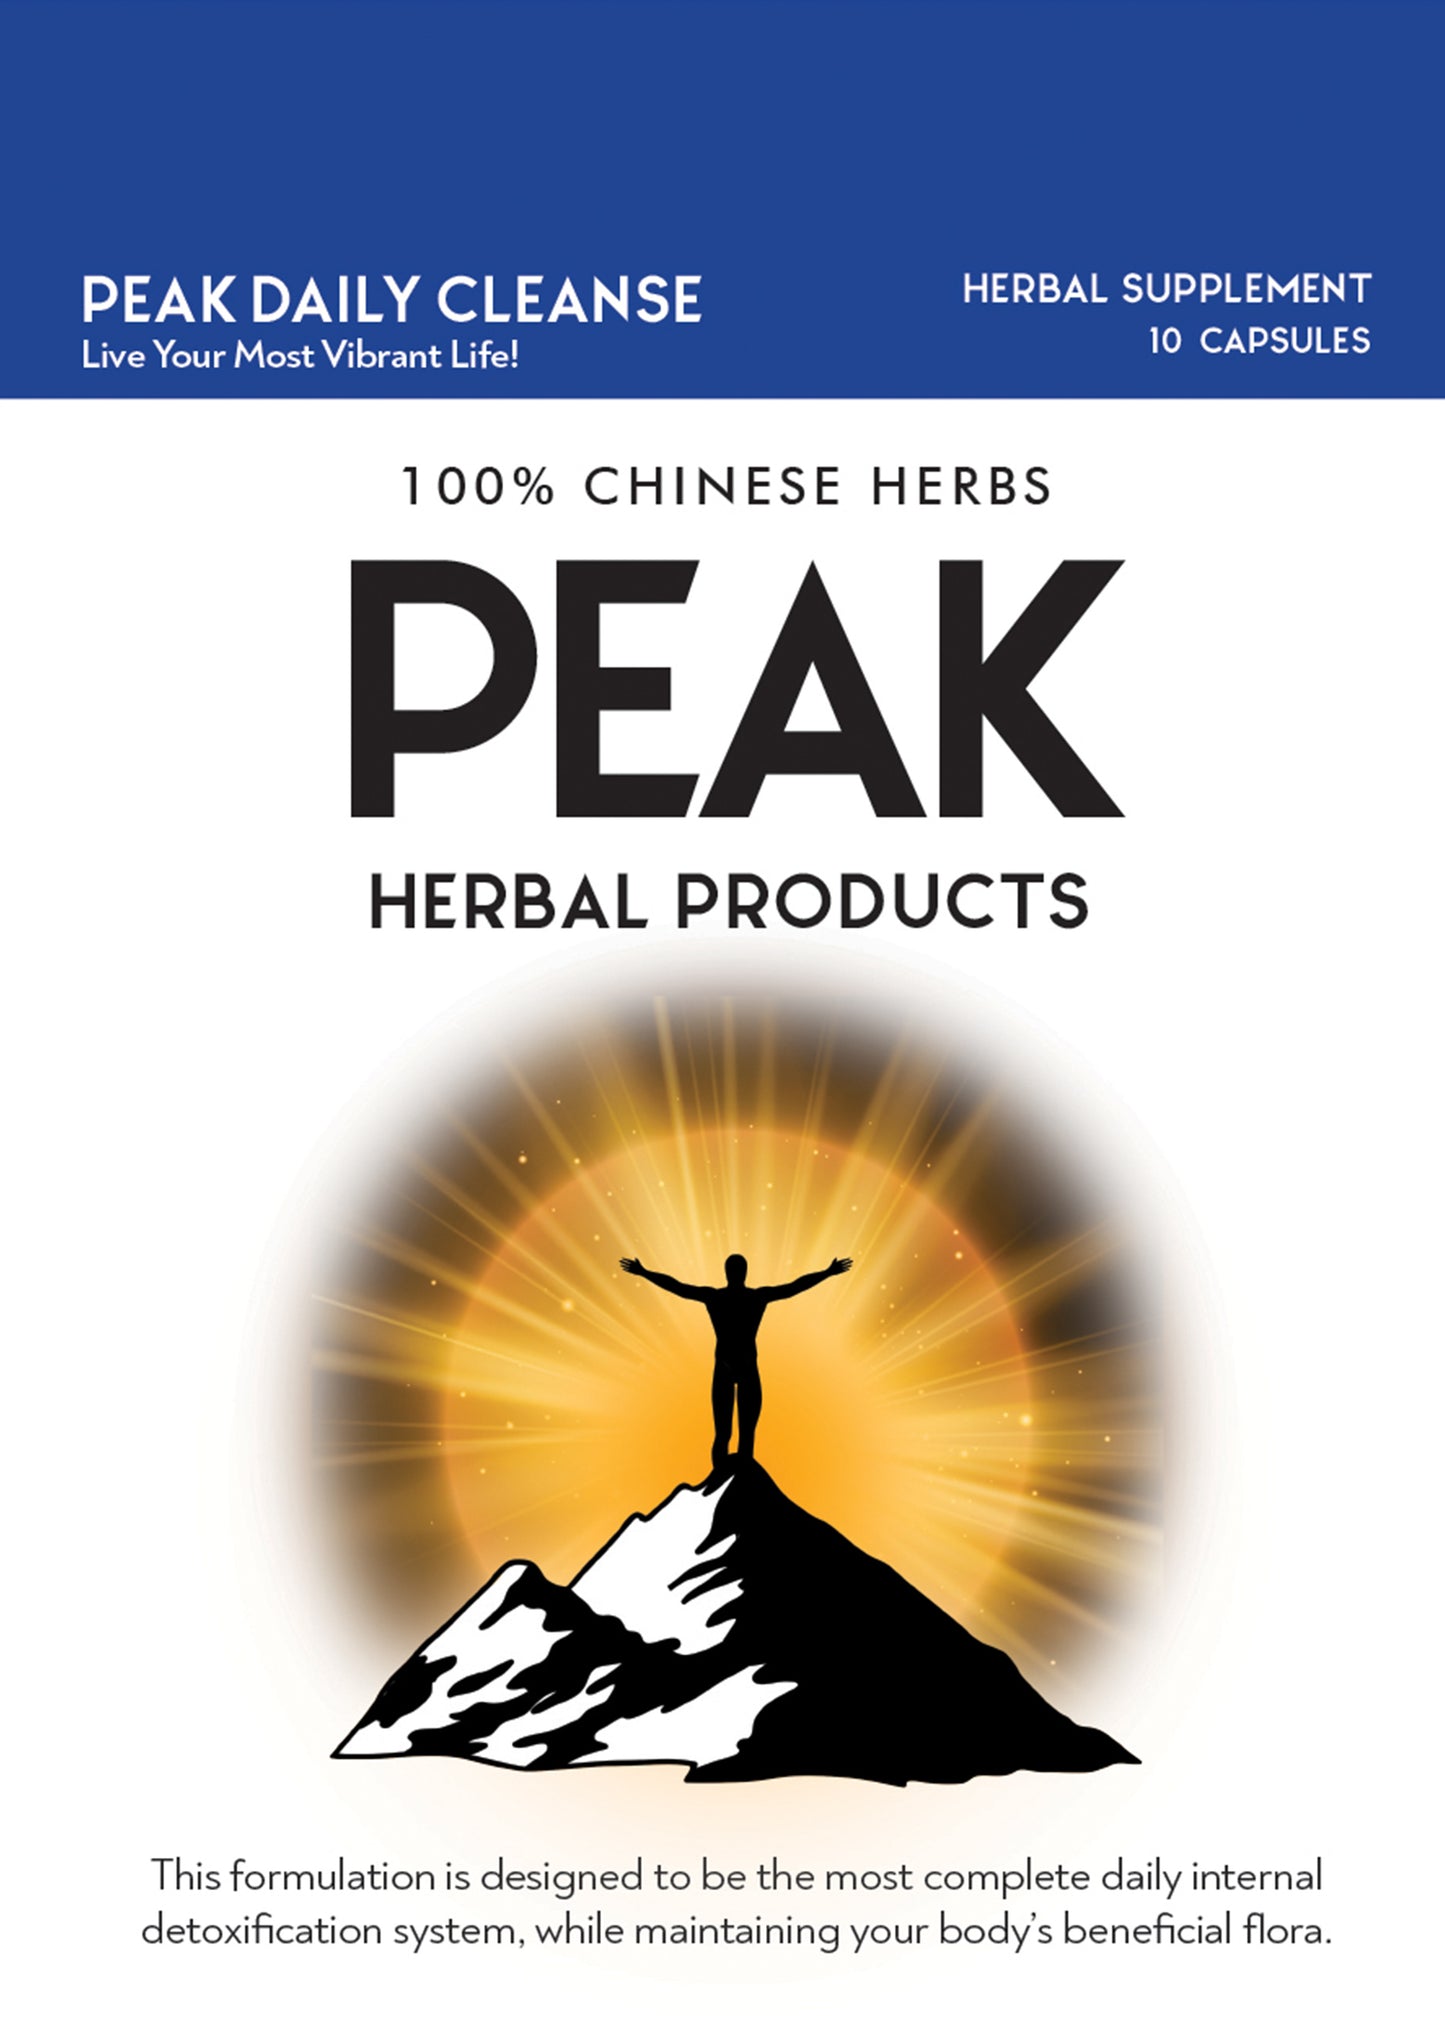 PEAK Daily Cleanse